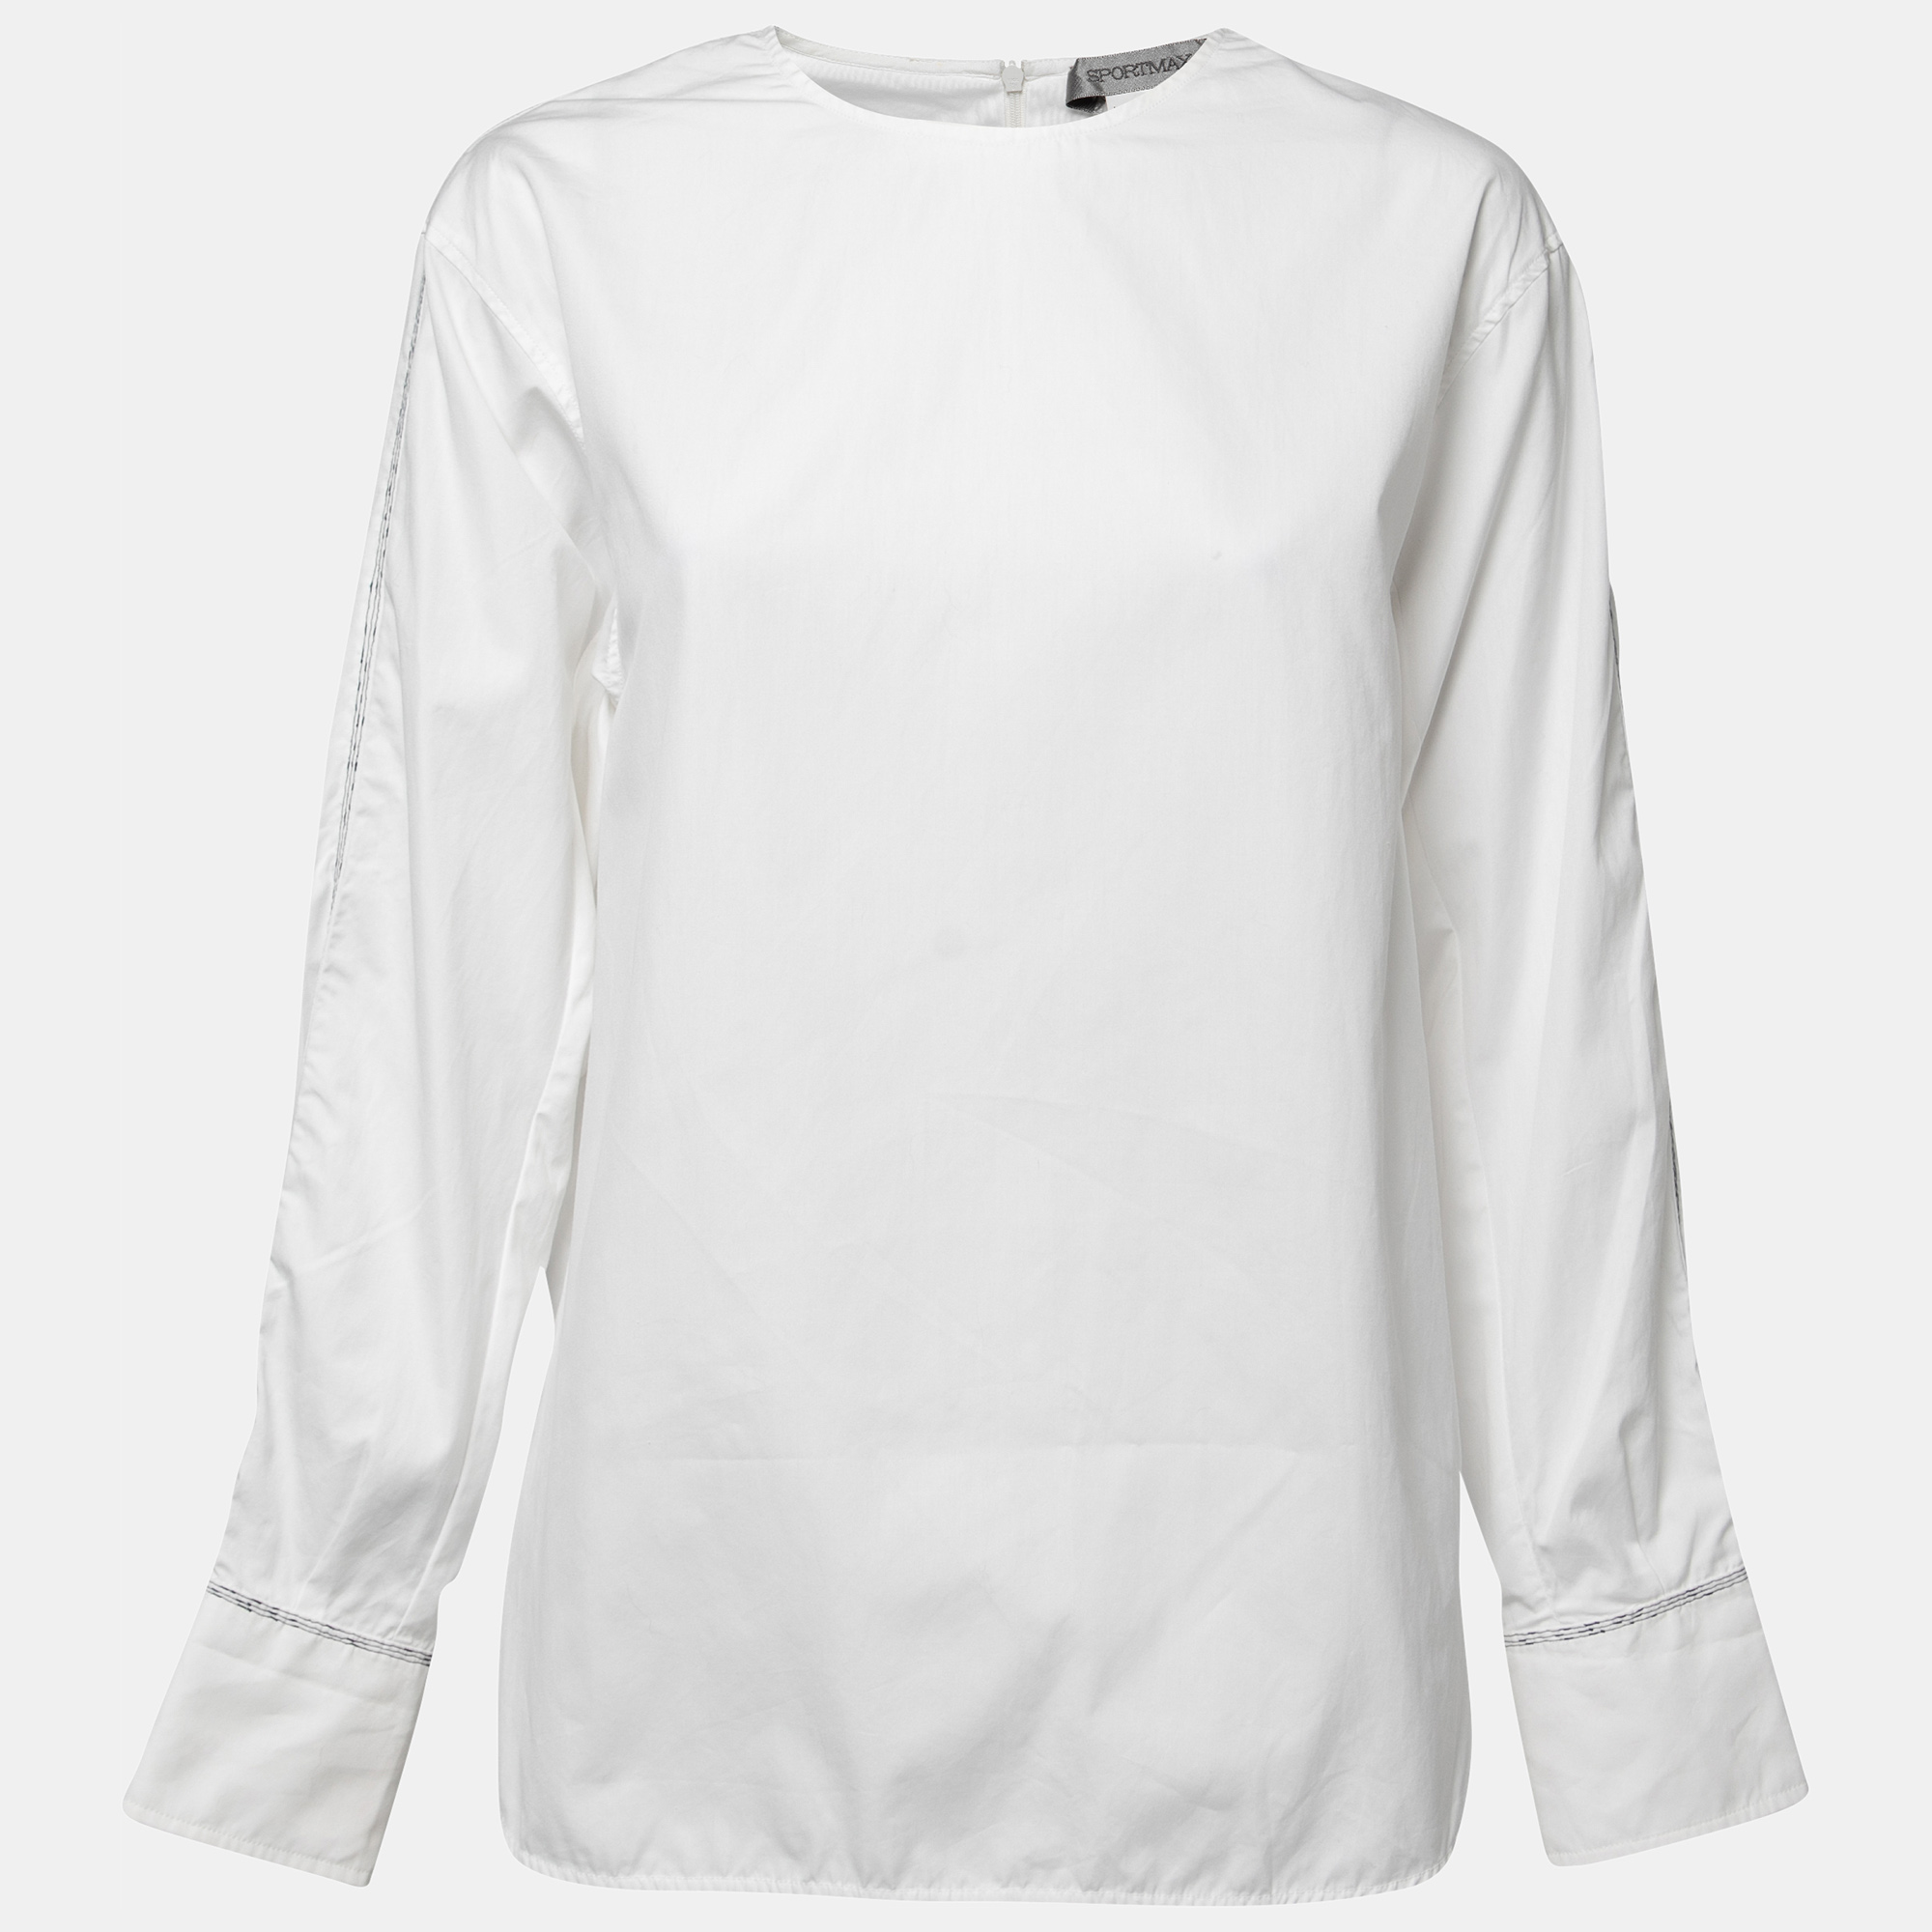 Sportmax White Cotton Long Sleeve Top M